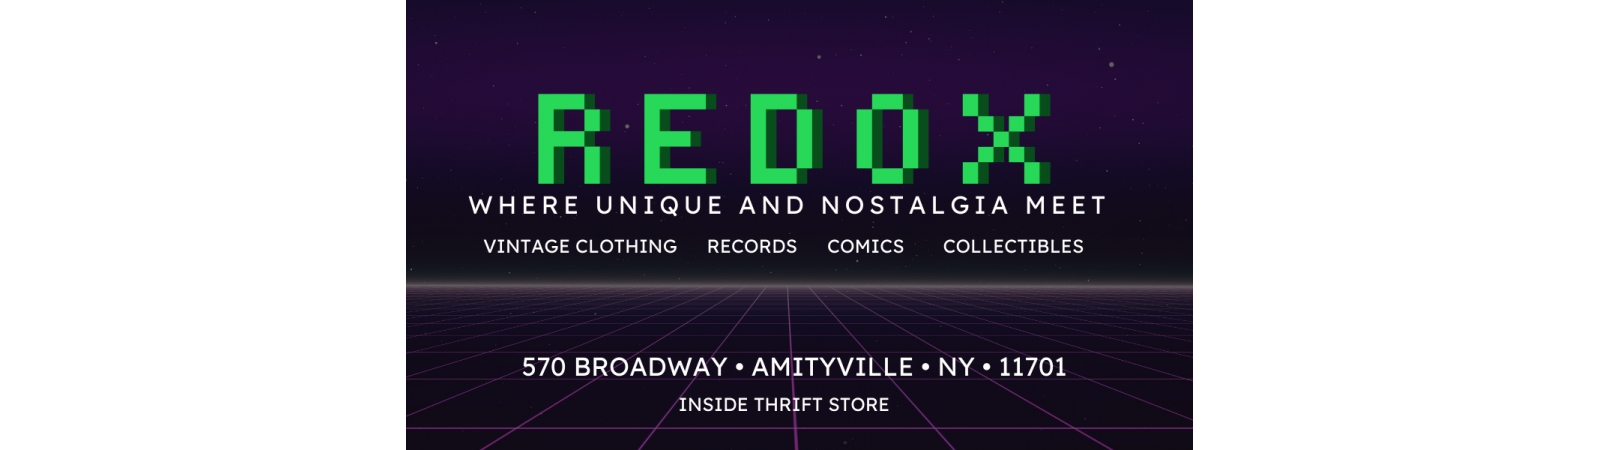 Redox Nostalgia | Auction Ninja